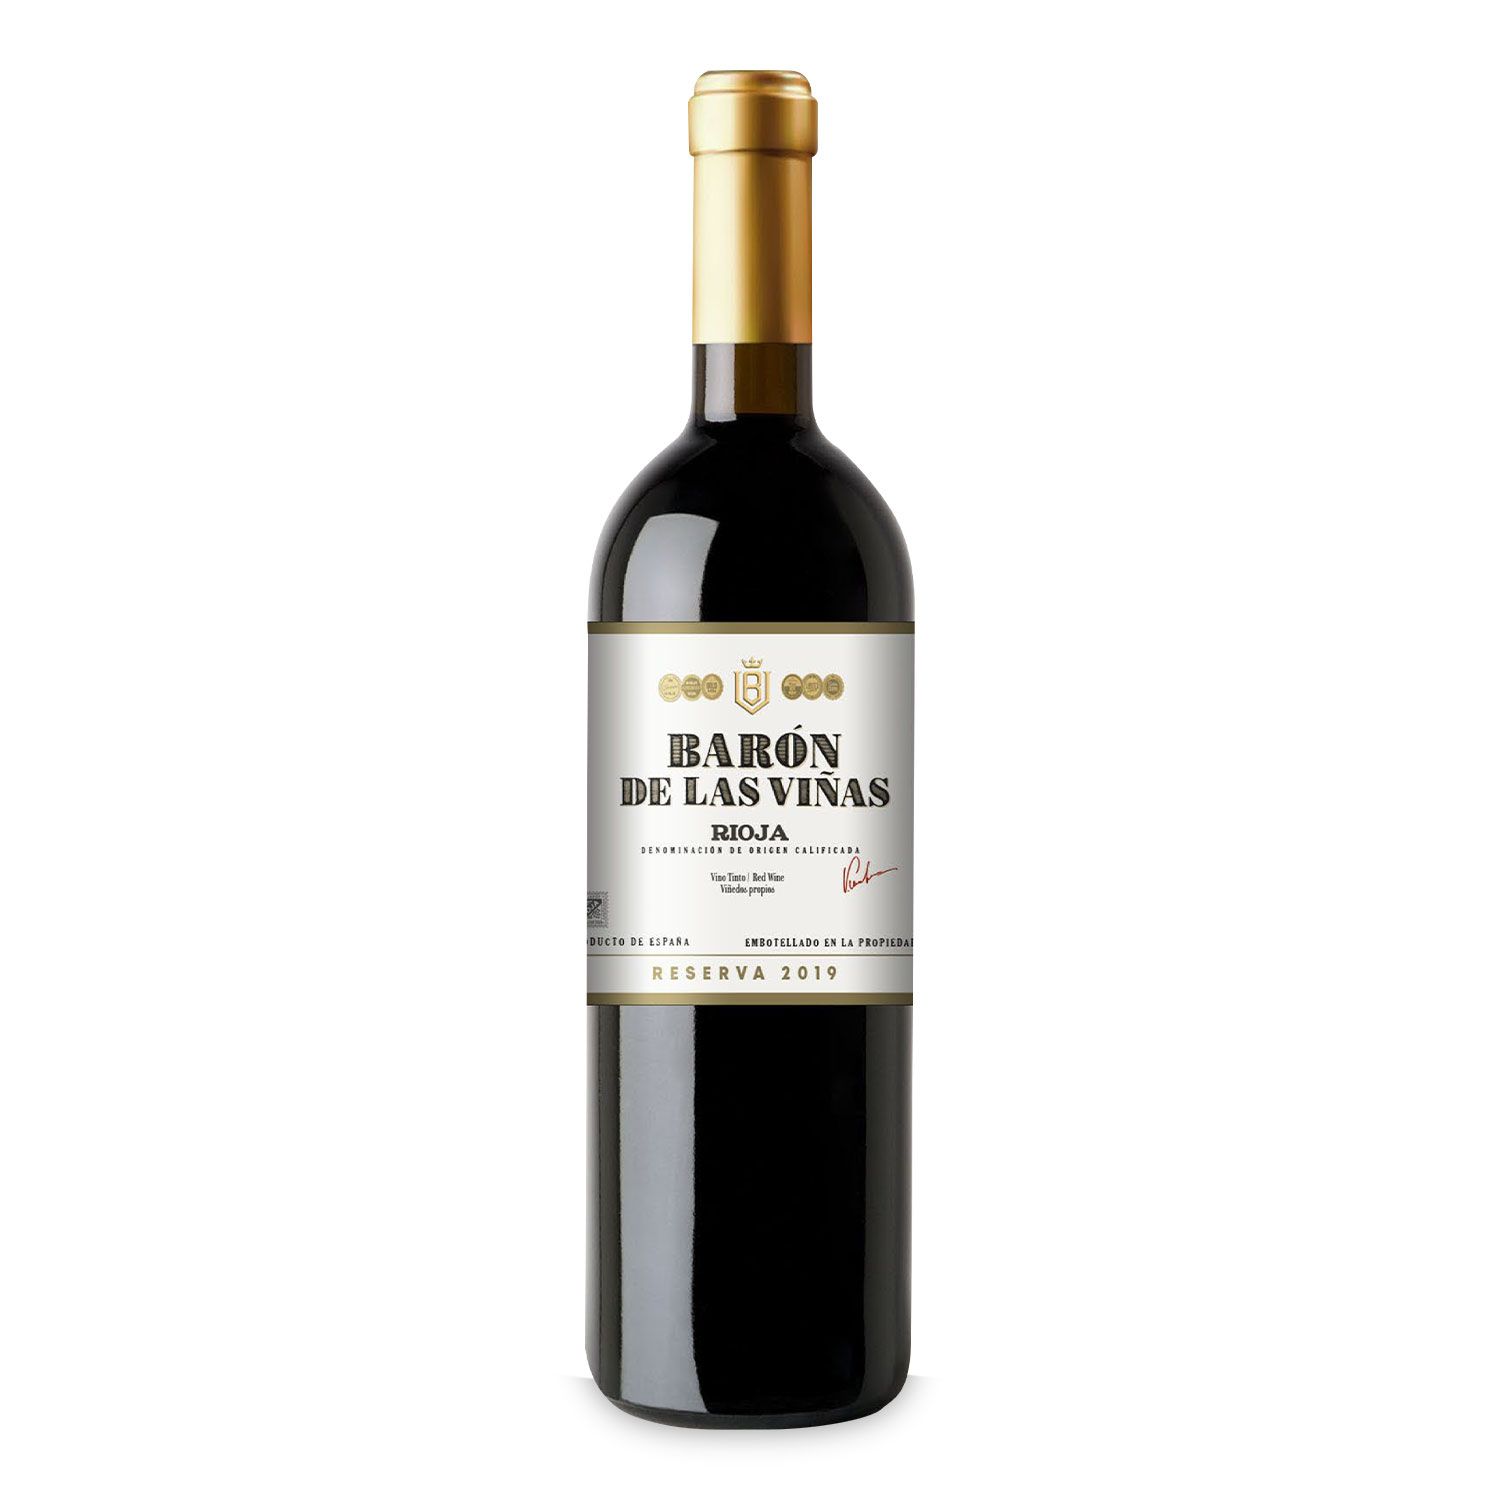 Aldis Baron de las Vinas Rioja kostet jetzt 3,99 £ pro Flasche